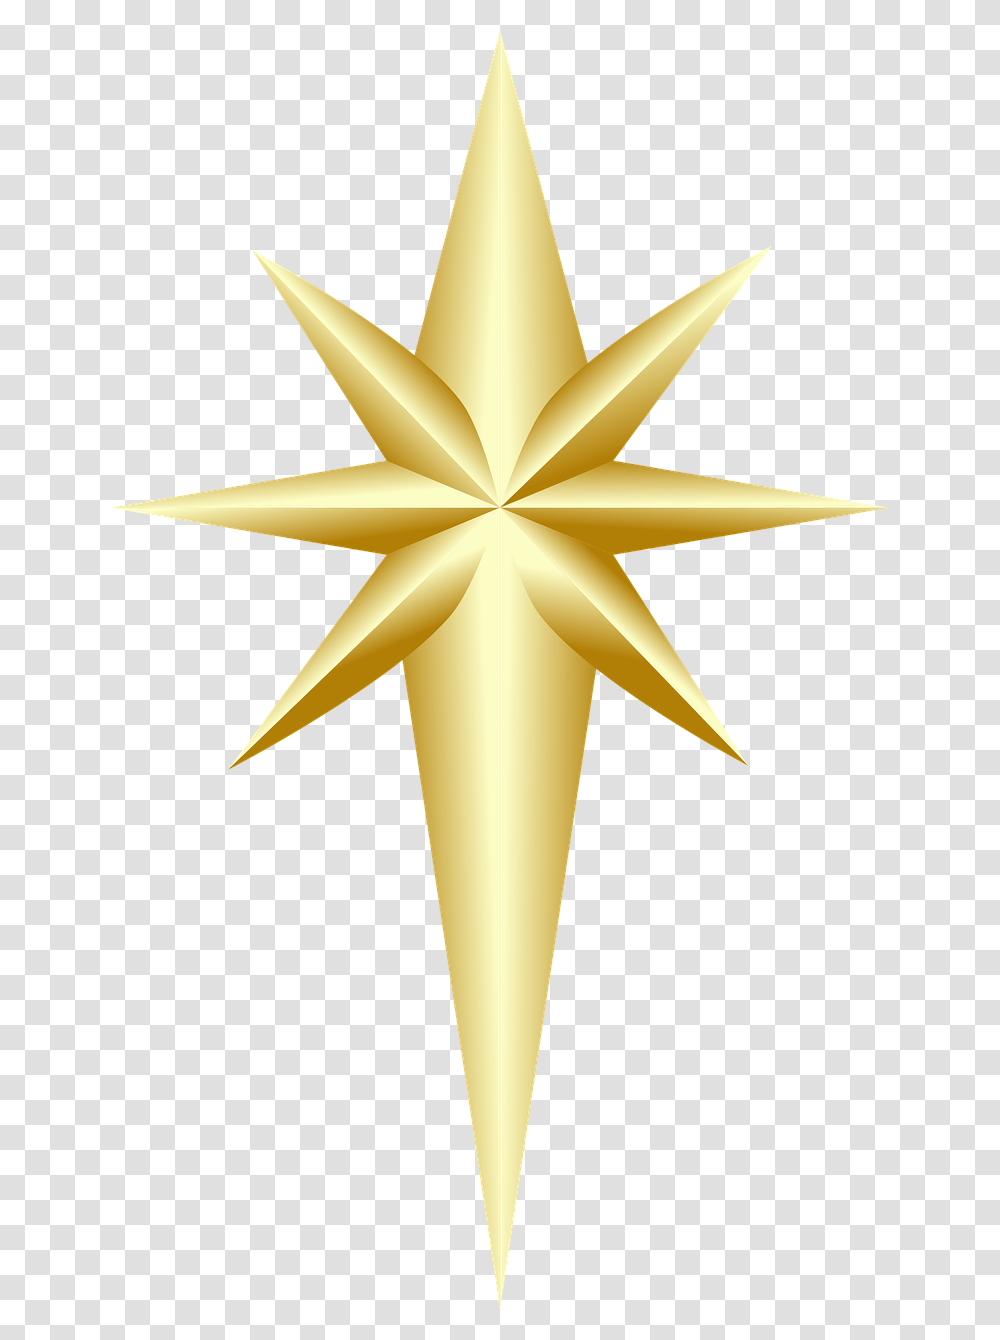 Christmas Tree Topper Ornament Free Photo Illustration, Cross, Star Symbol, Gold Transparent Png